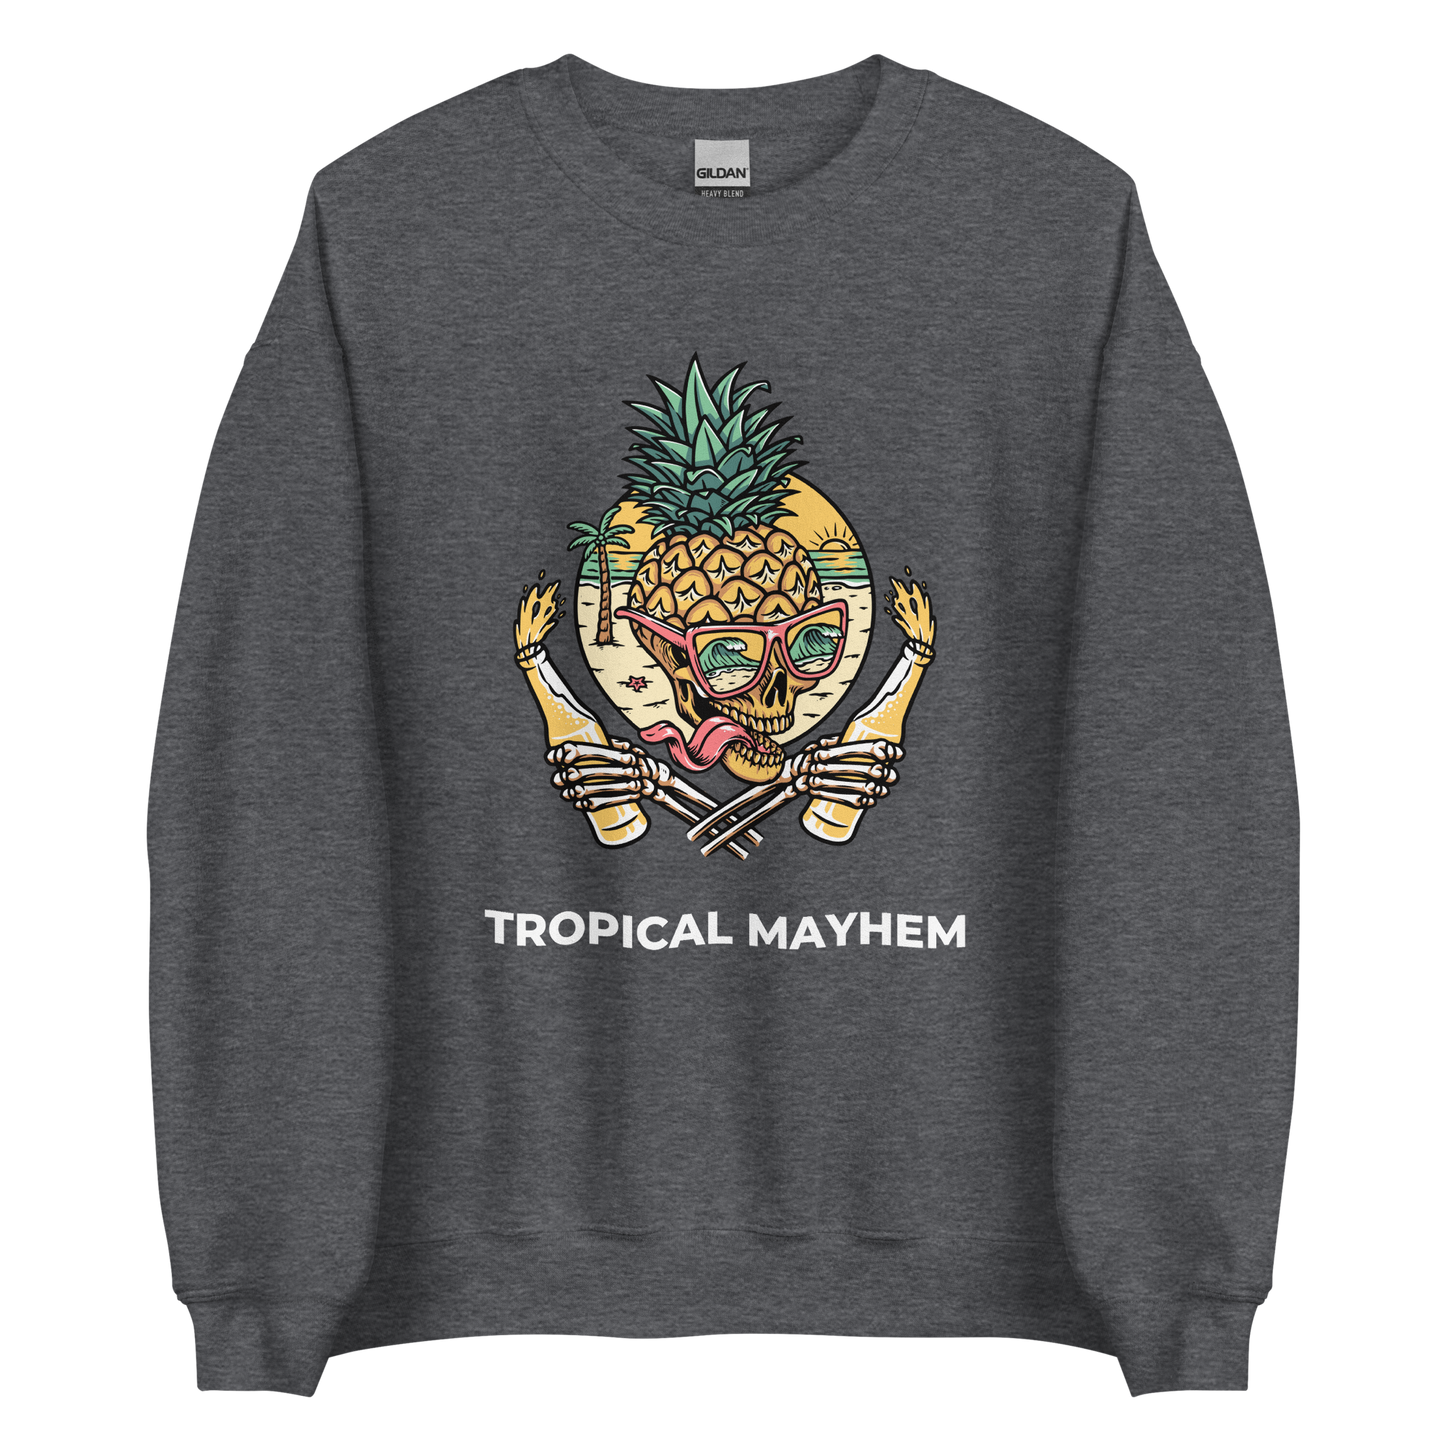 Dark Heather Tropical Mayhem Sweatshirt featuring a Crazy Pineapple Skull graphic on the chest - Funny Graphic Pineapple Sweatshirts - Boozy Fox